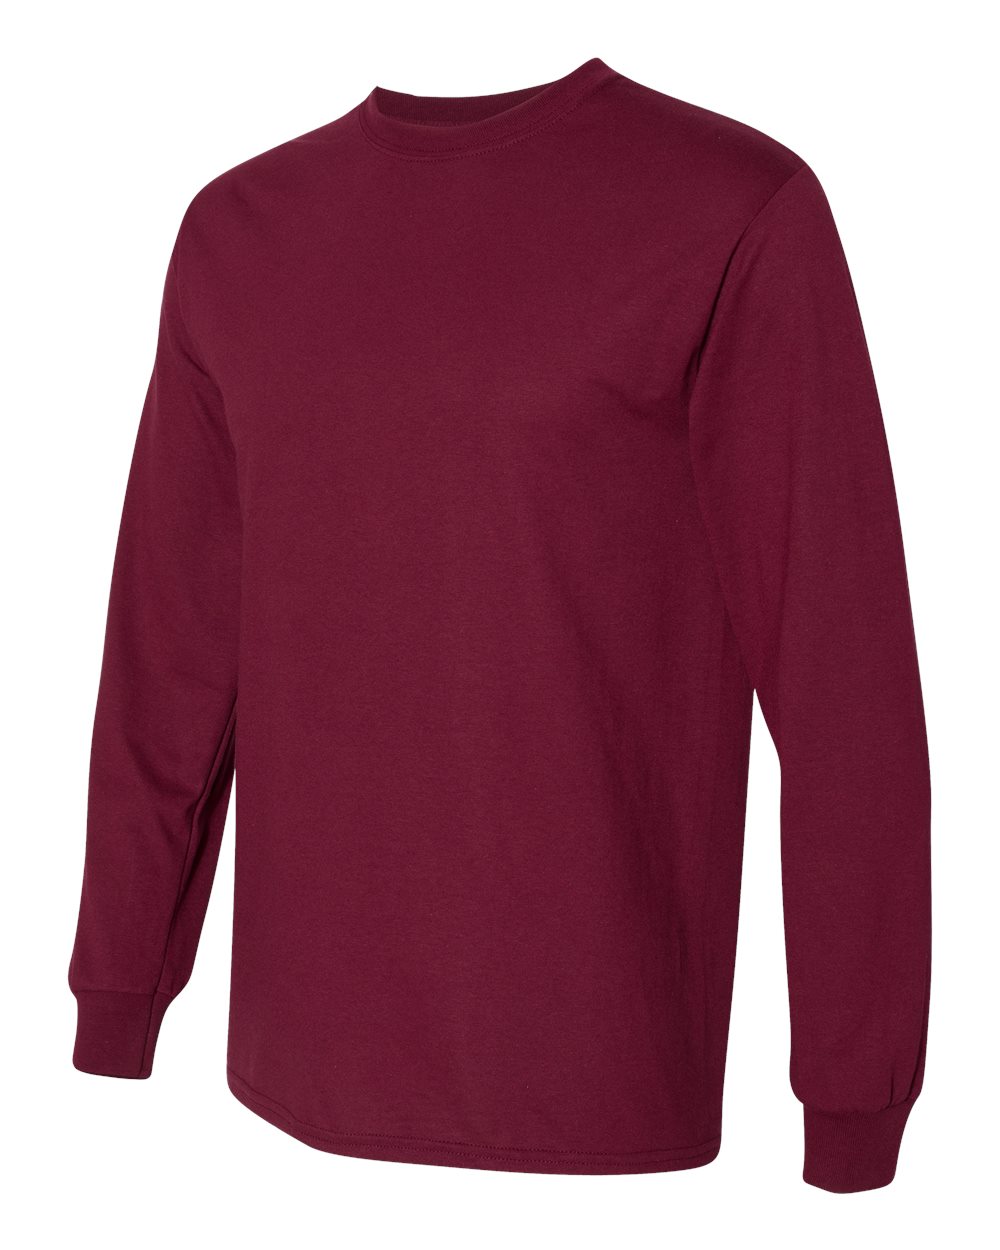 Gildan 8400-DryBlend 50/50 Long Sleeve T-Shirt $6.13 - T-Shirts